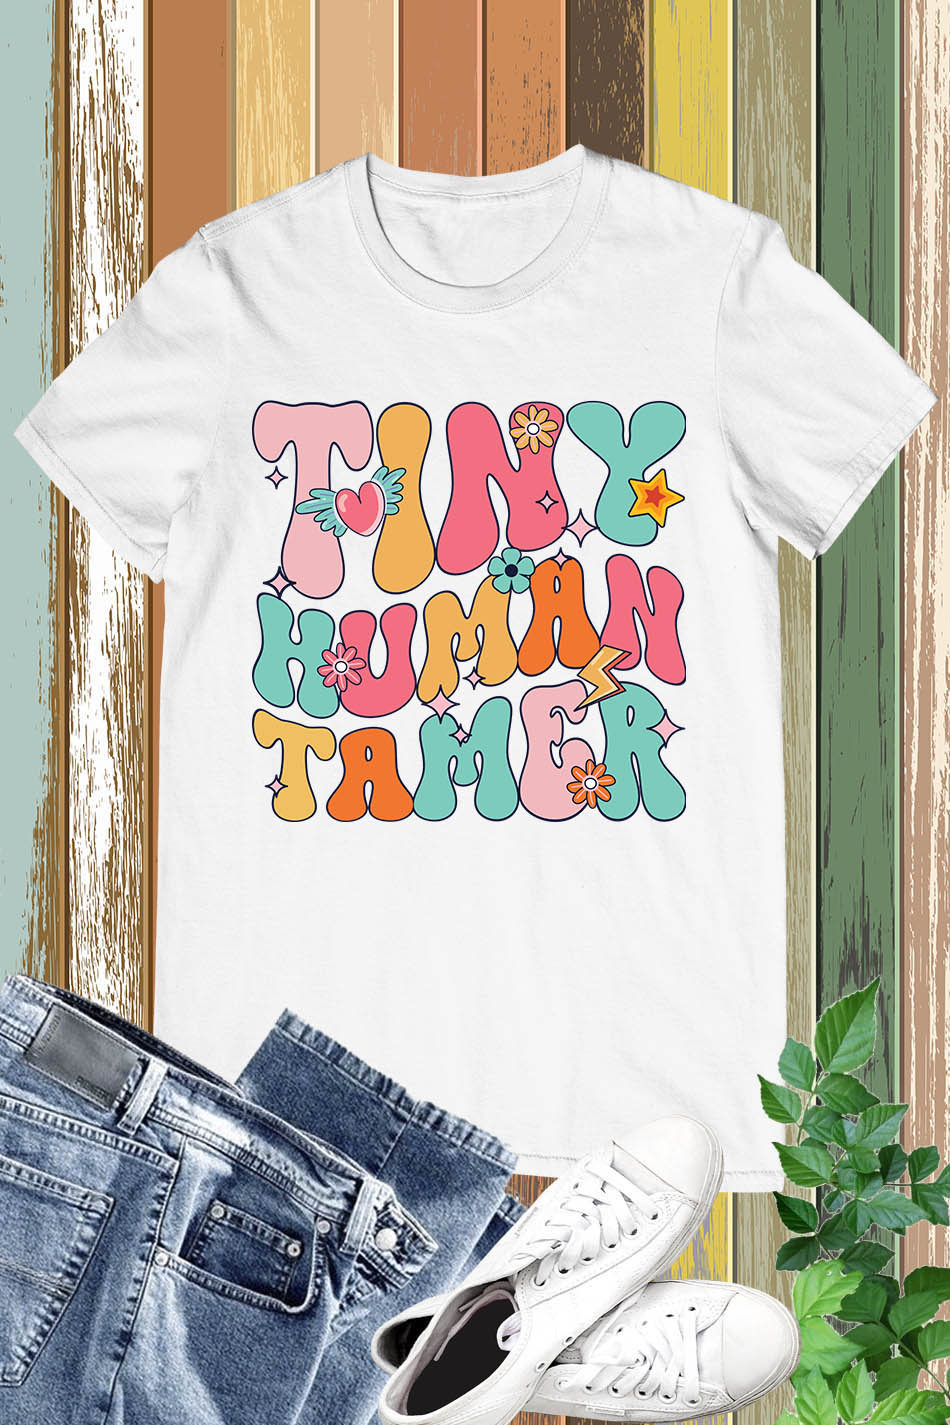 Tiny Human Tamer Daycare PreK Teacher T Shirt